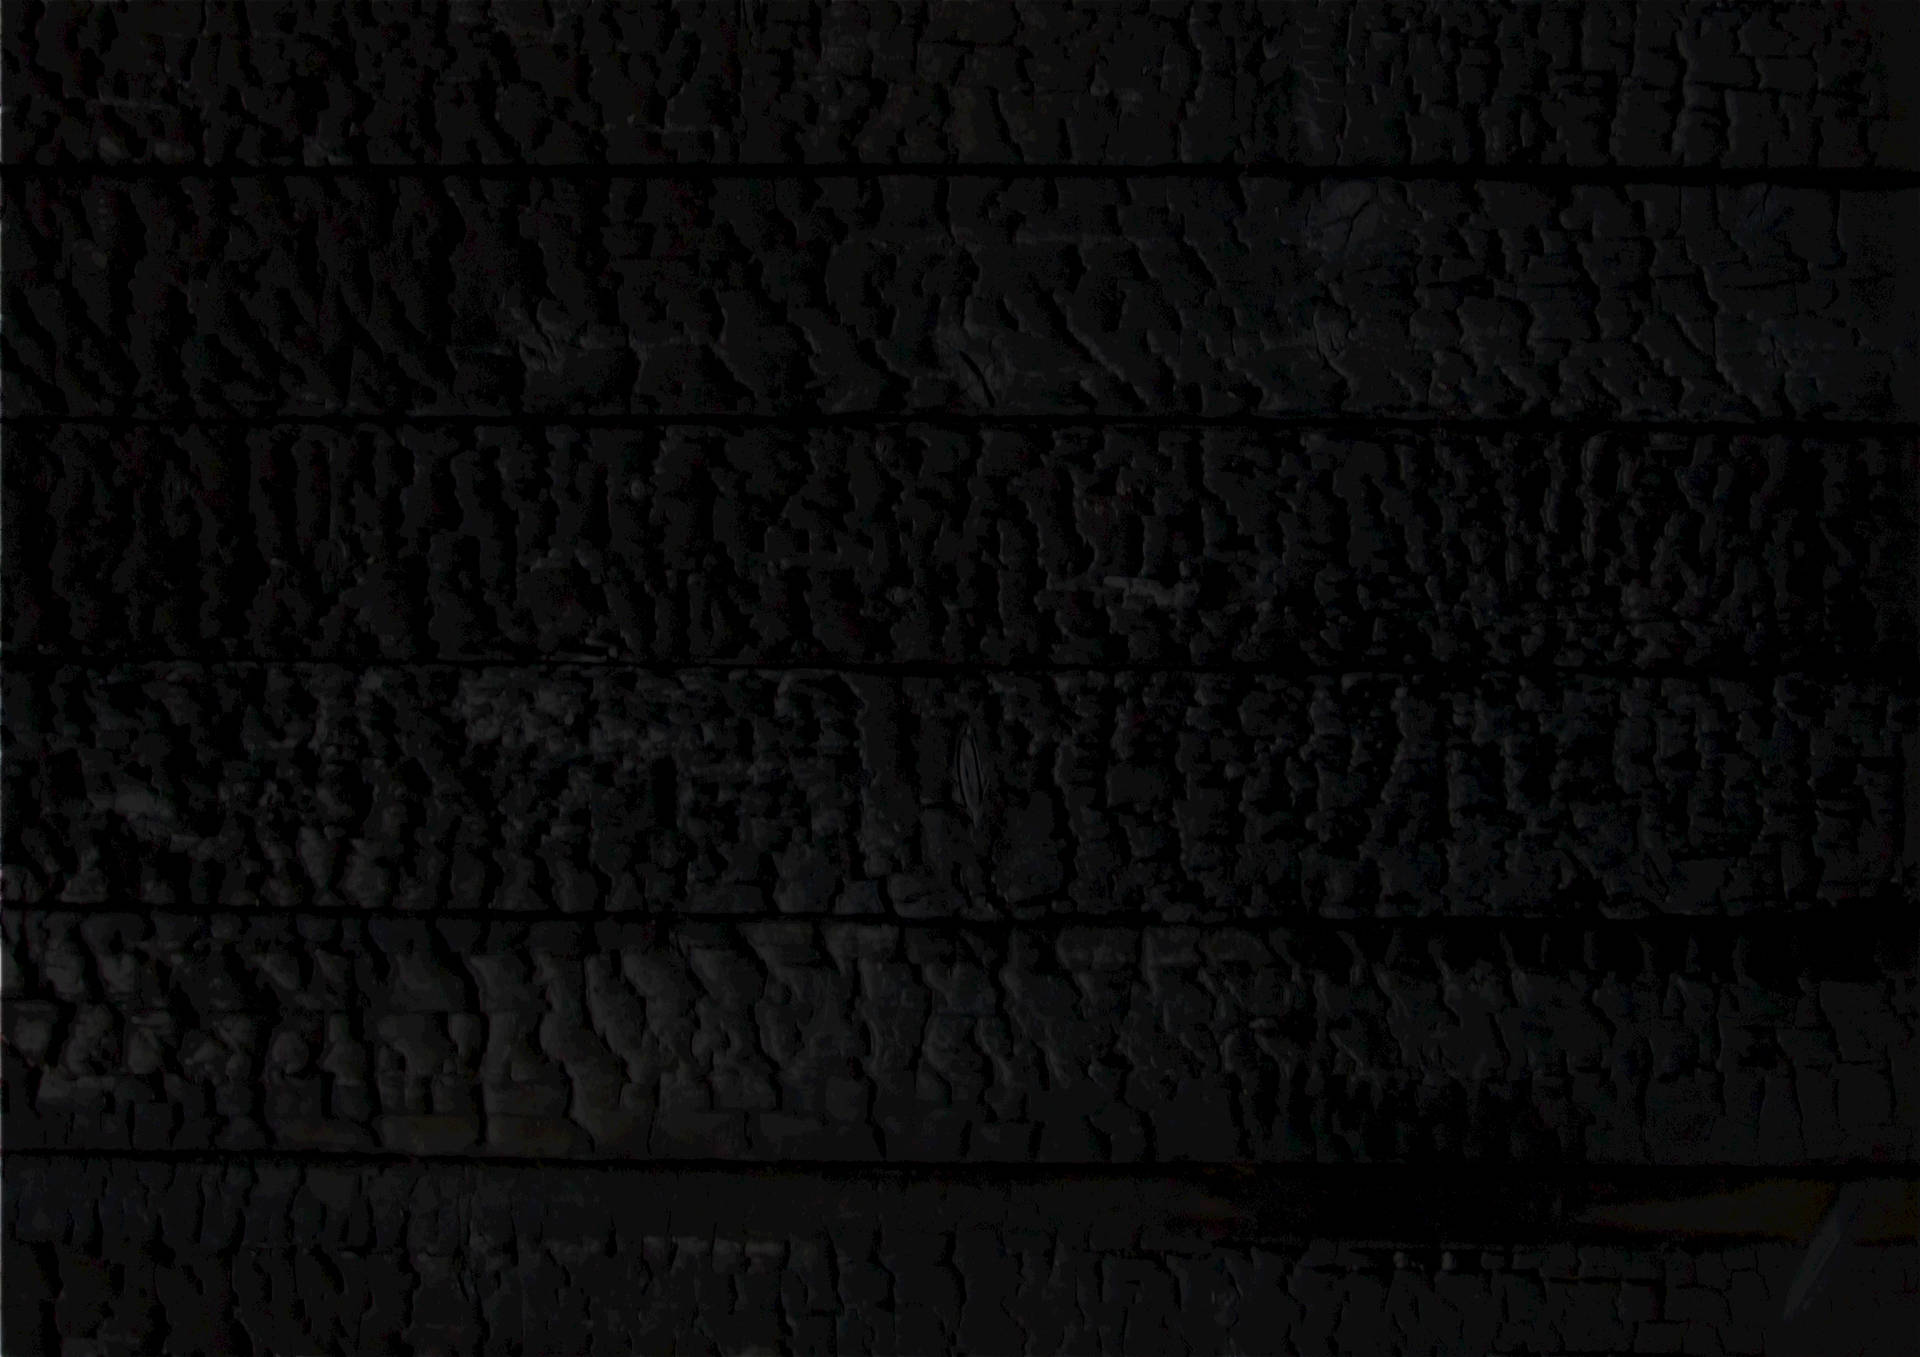 Dark 4961X3507 Wallpaper and Background Image